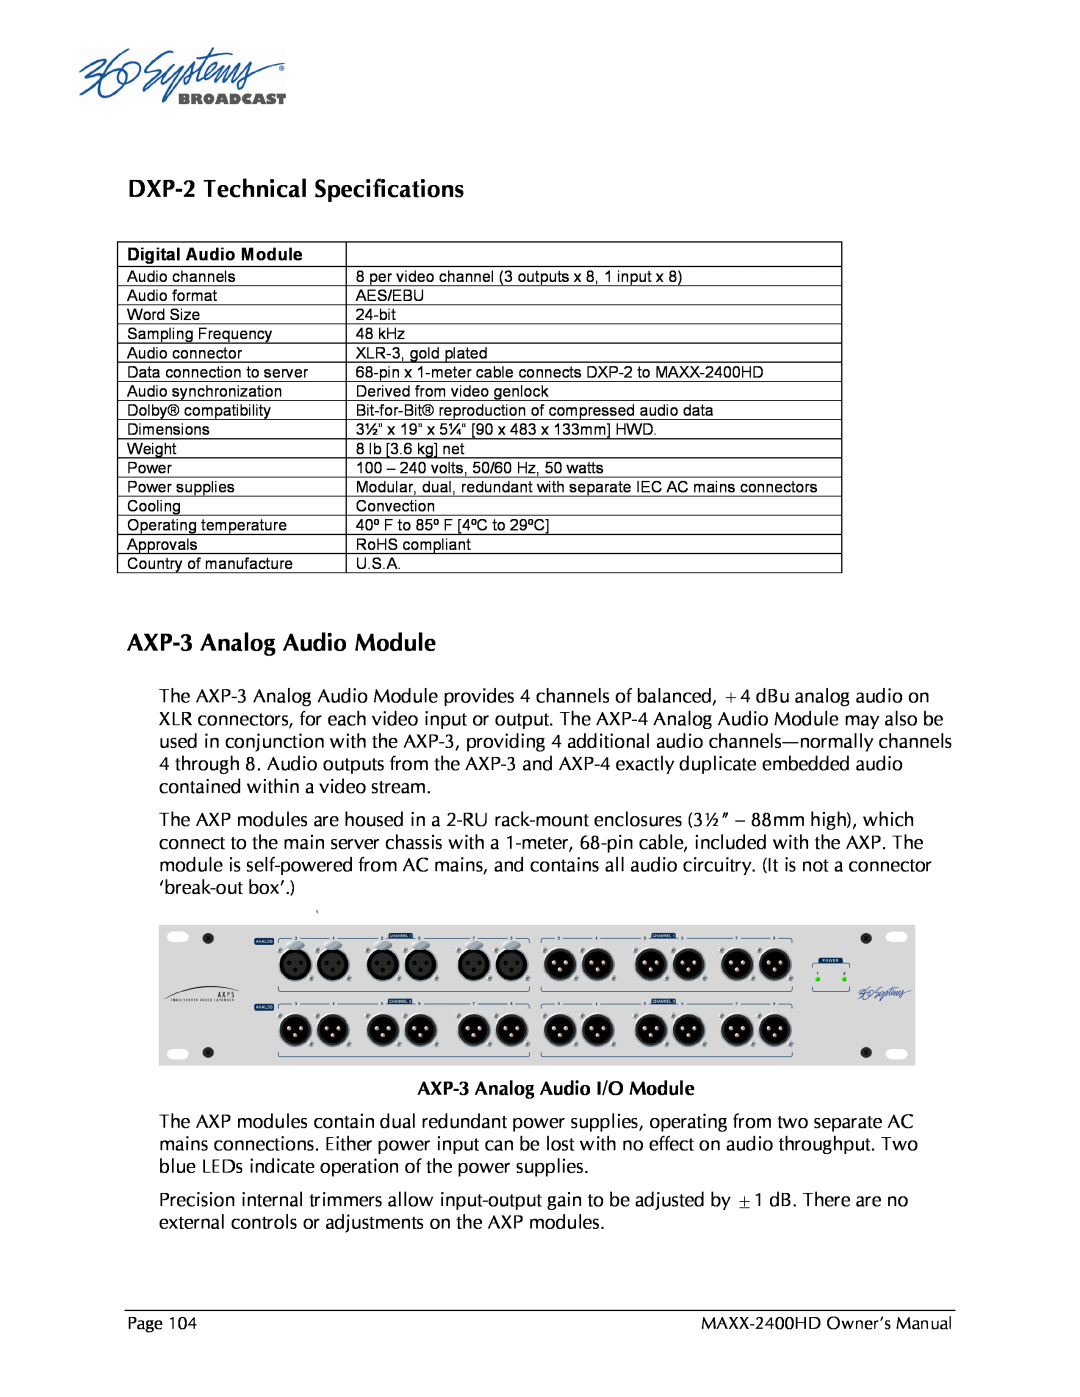 Maxxsonics MAXX-2400HD manual DXP-2Technical Specifications, AXP-3Analog Audio Module 